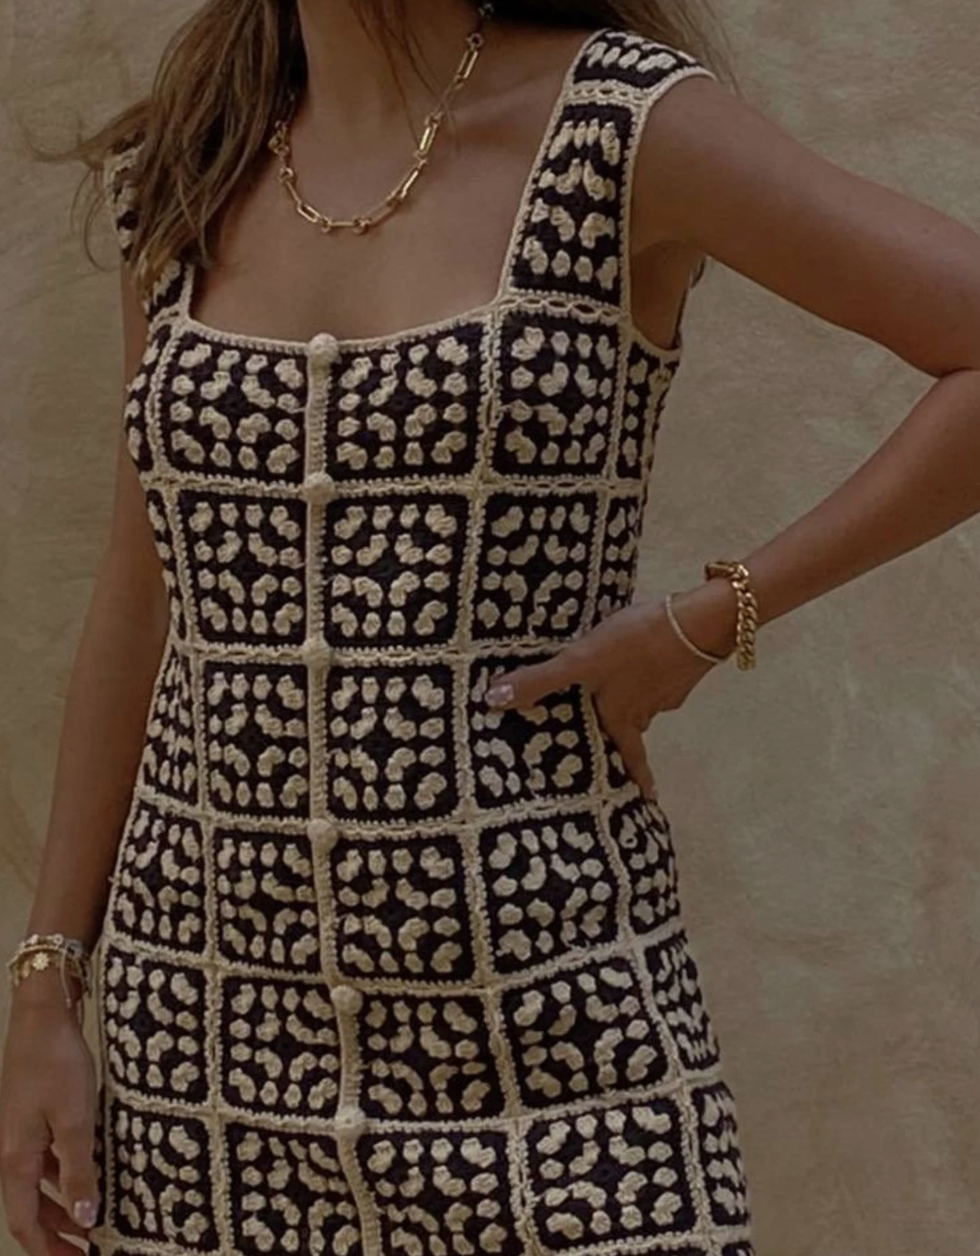 A model wears a crochet dress and gold jewelry